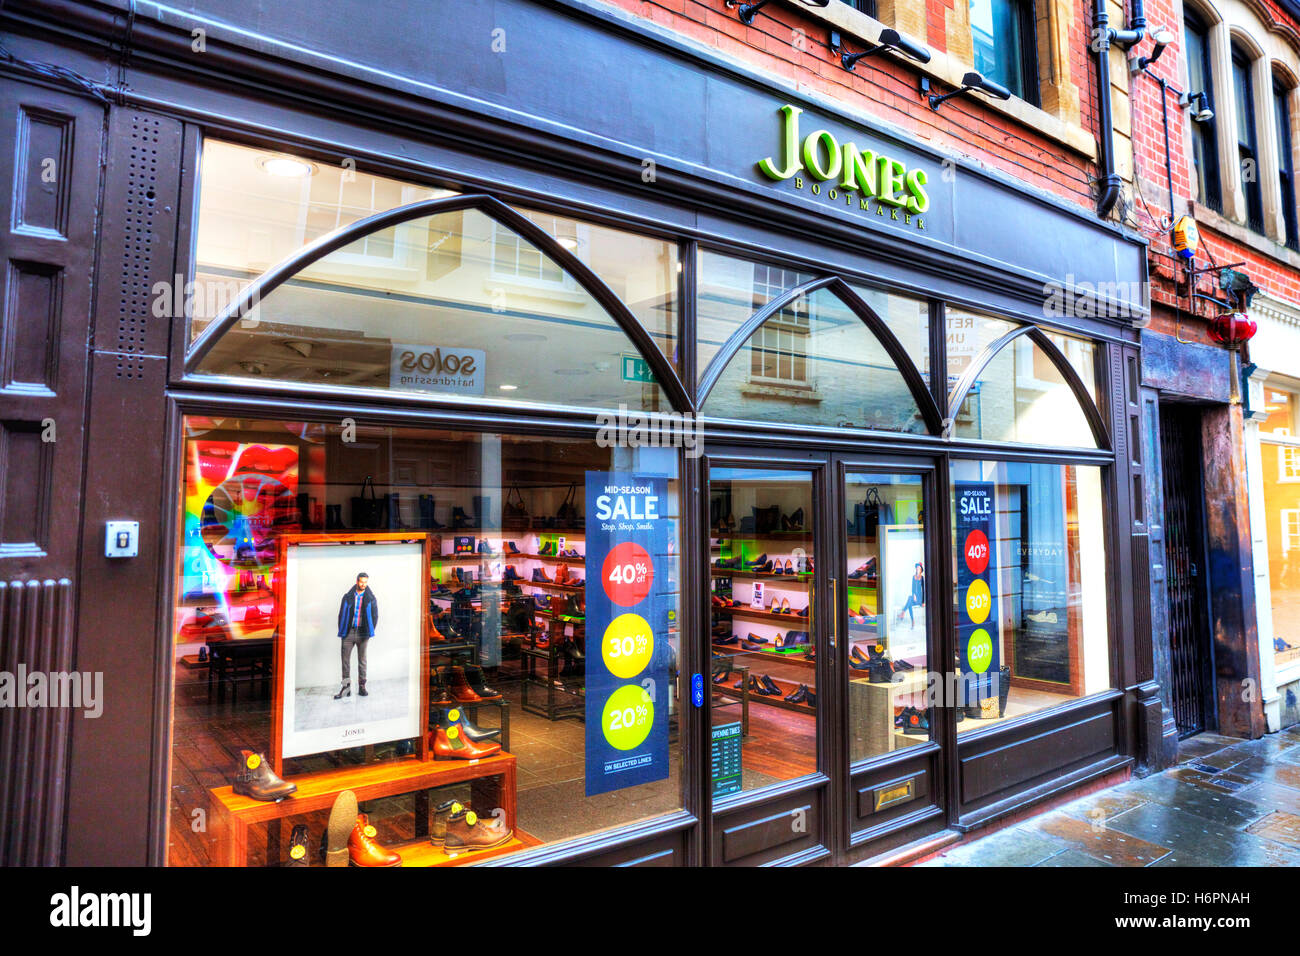 Jones bootmaker shoe shop store chain sign exterior front entrance  Nottingham UK GB England high street shops stores Stock Photo - Alamy